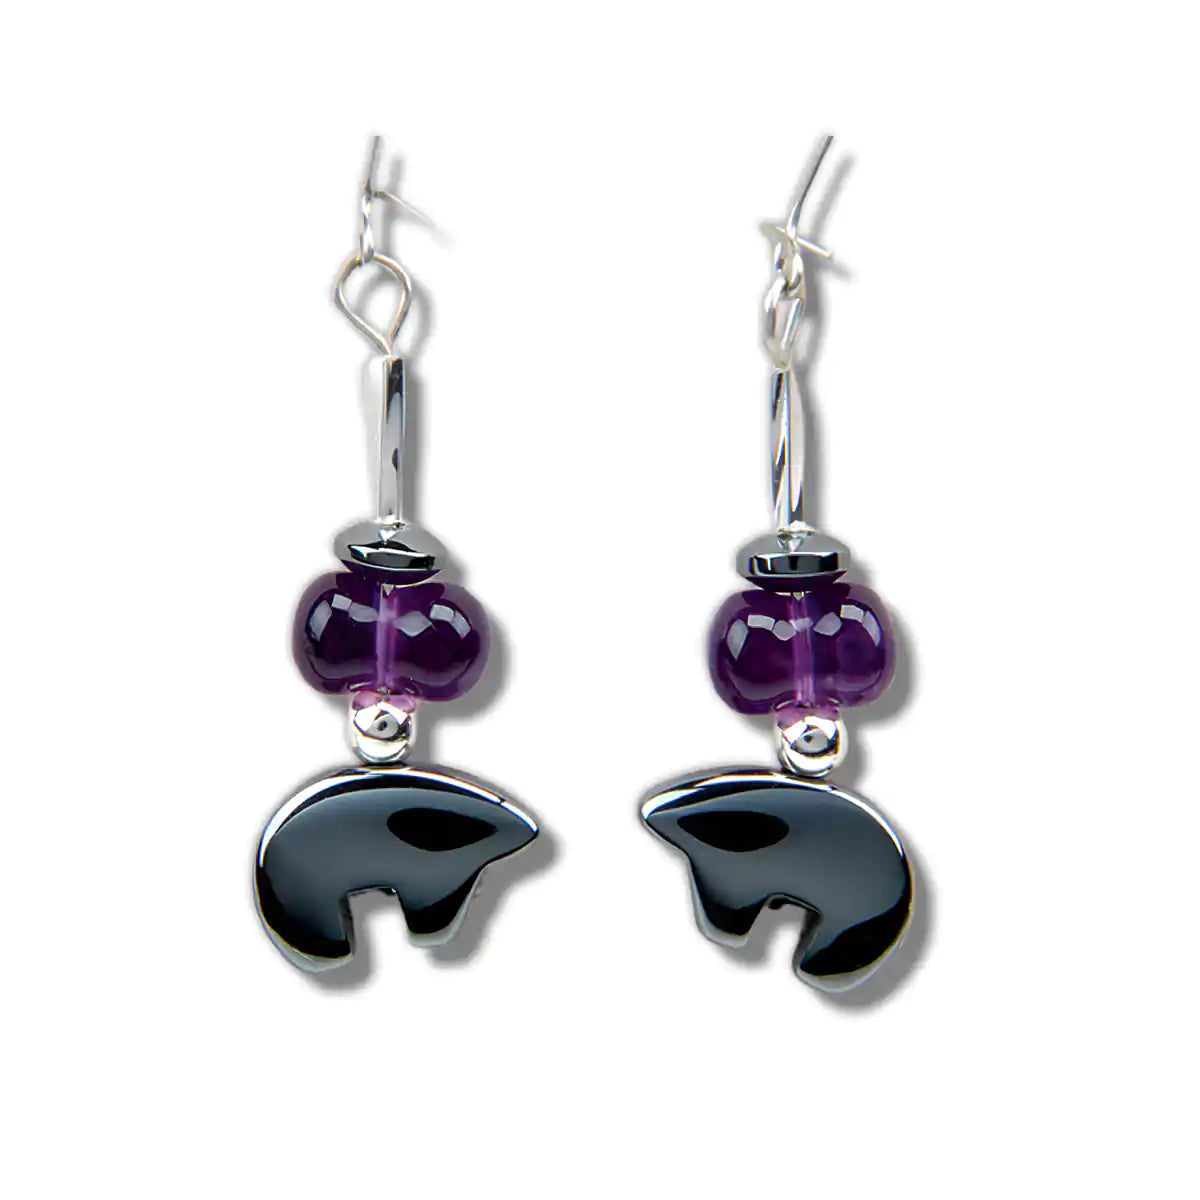 Hematite twilight bears earrings